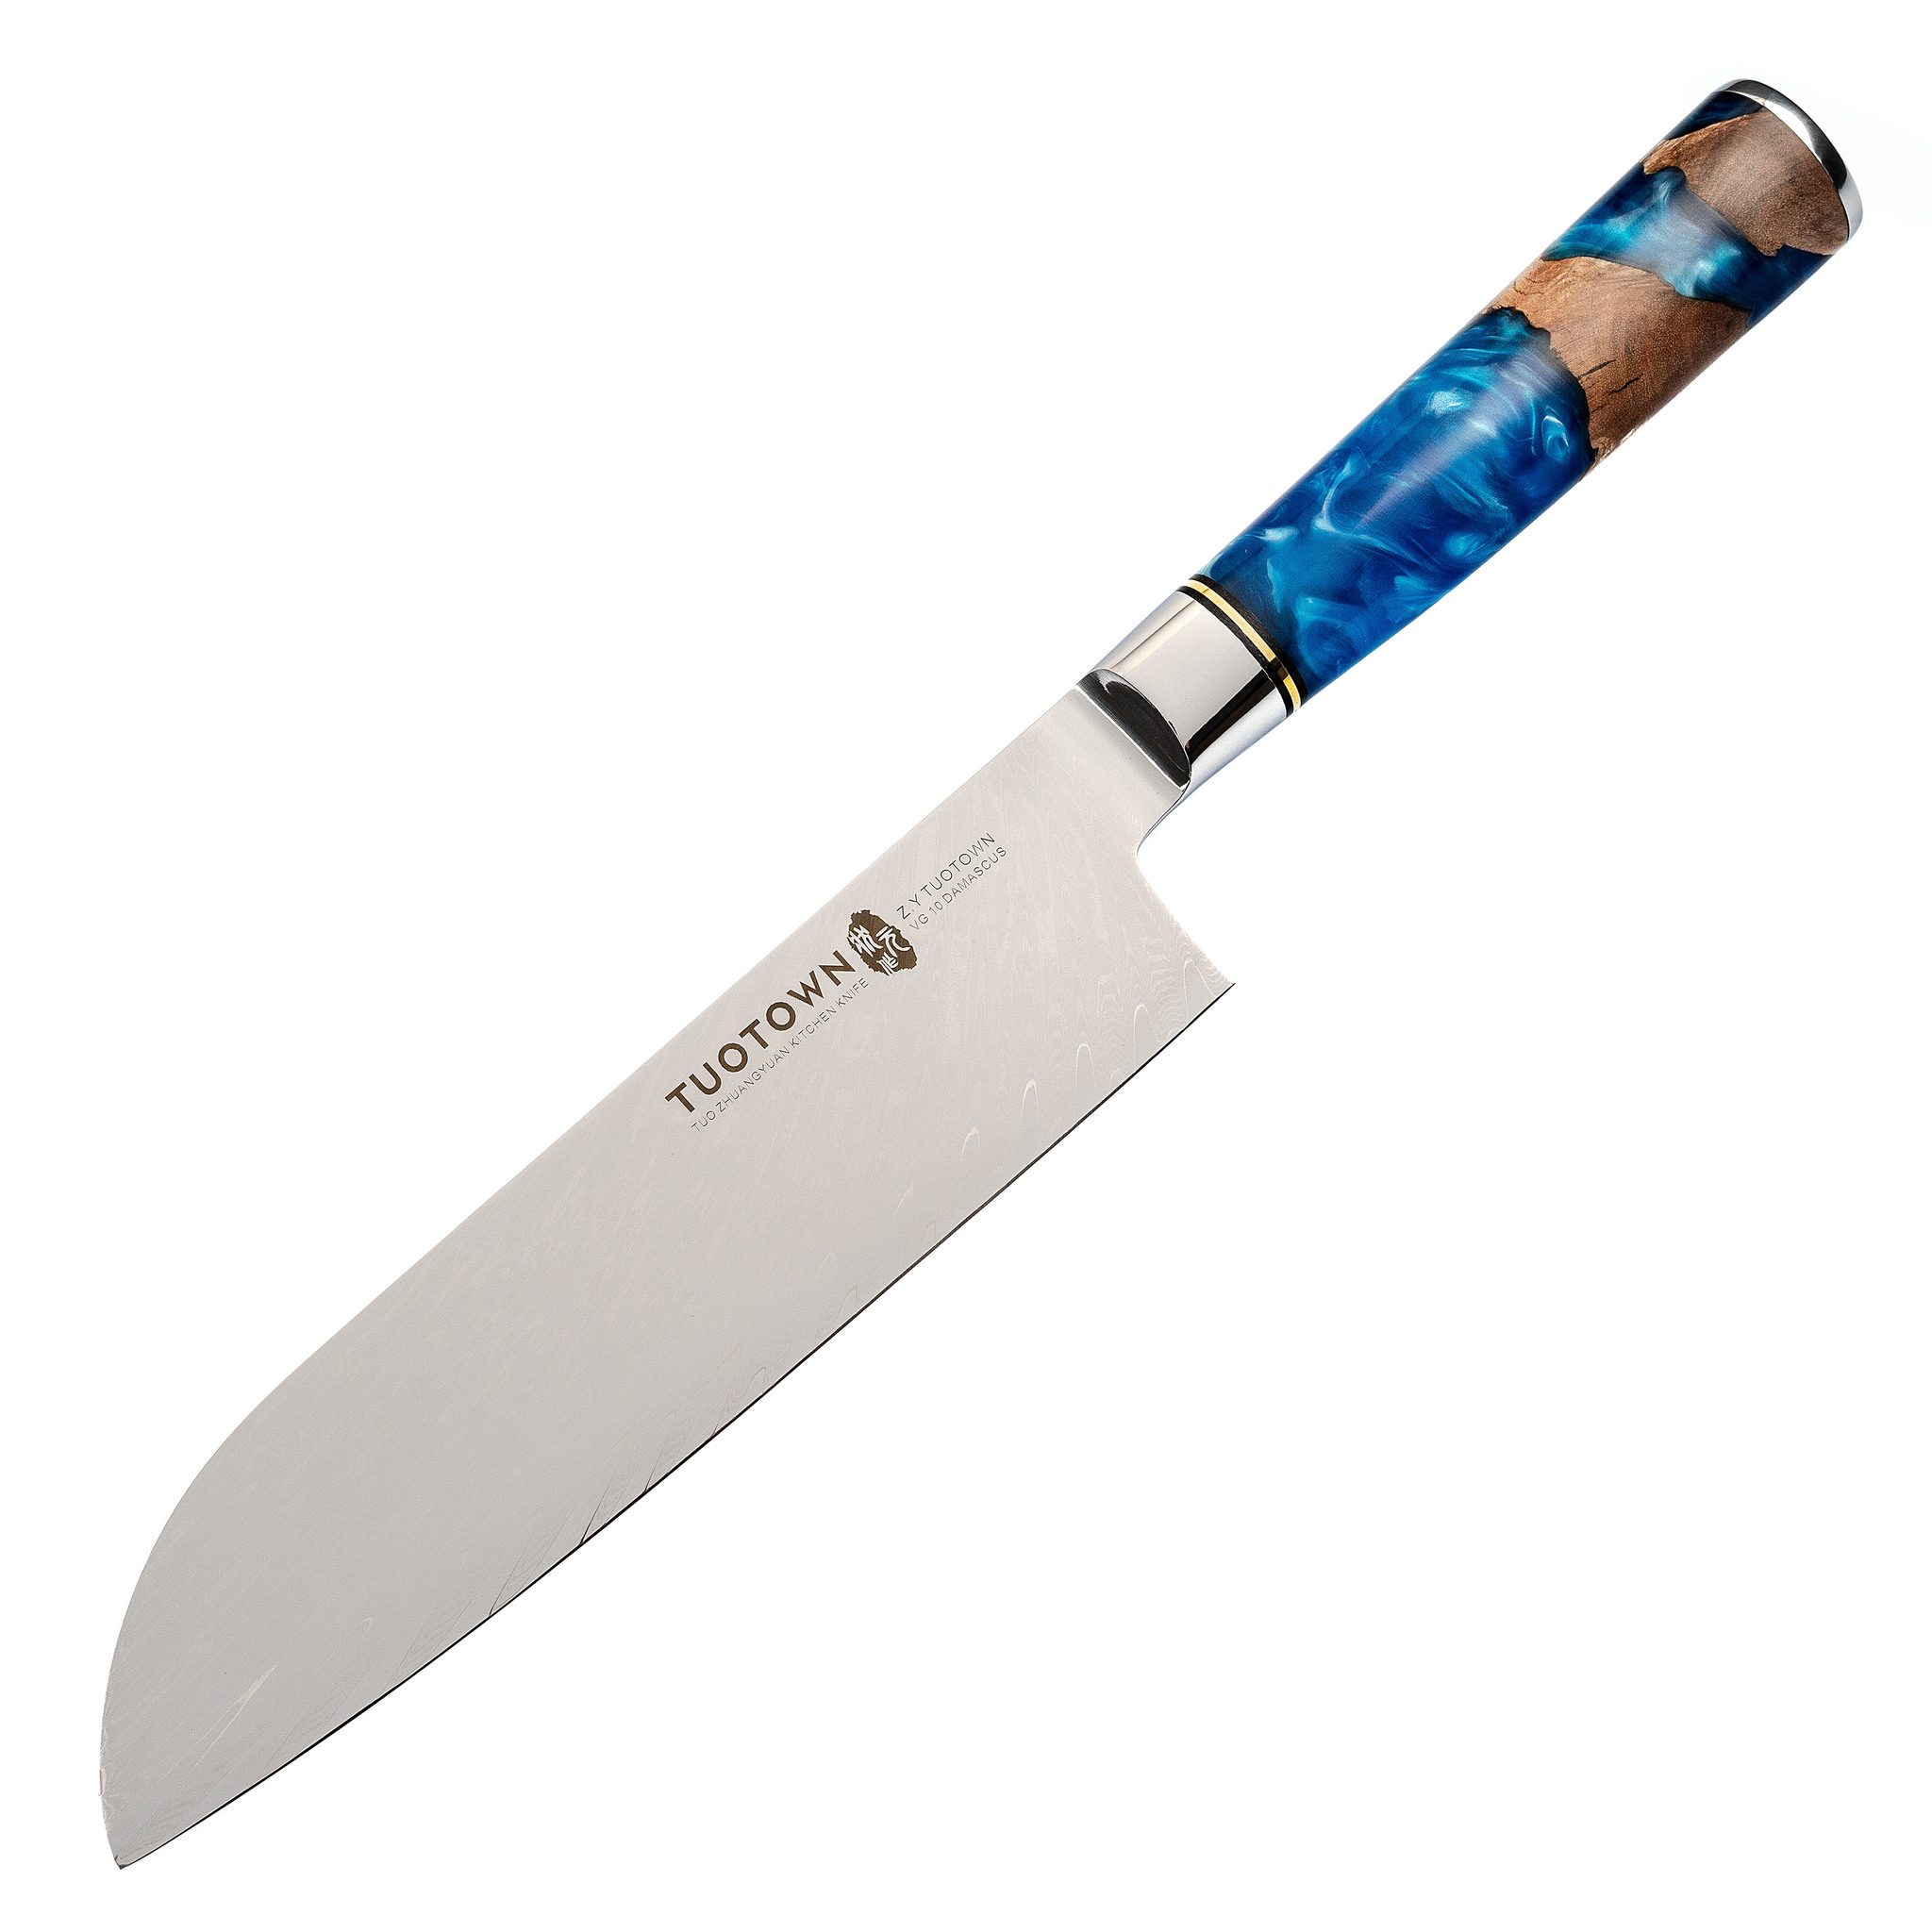 Кухонный нож Сантоку Tuotown TWB-D6, сталь VG-10, рукоять дерево/эпоксидка